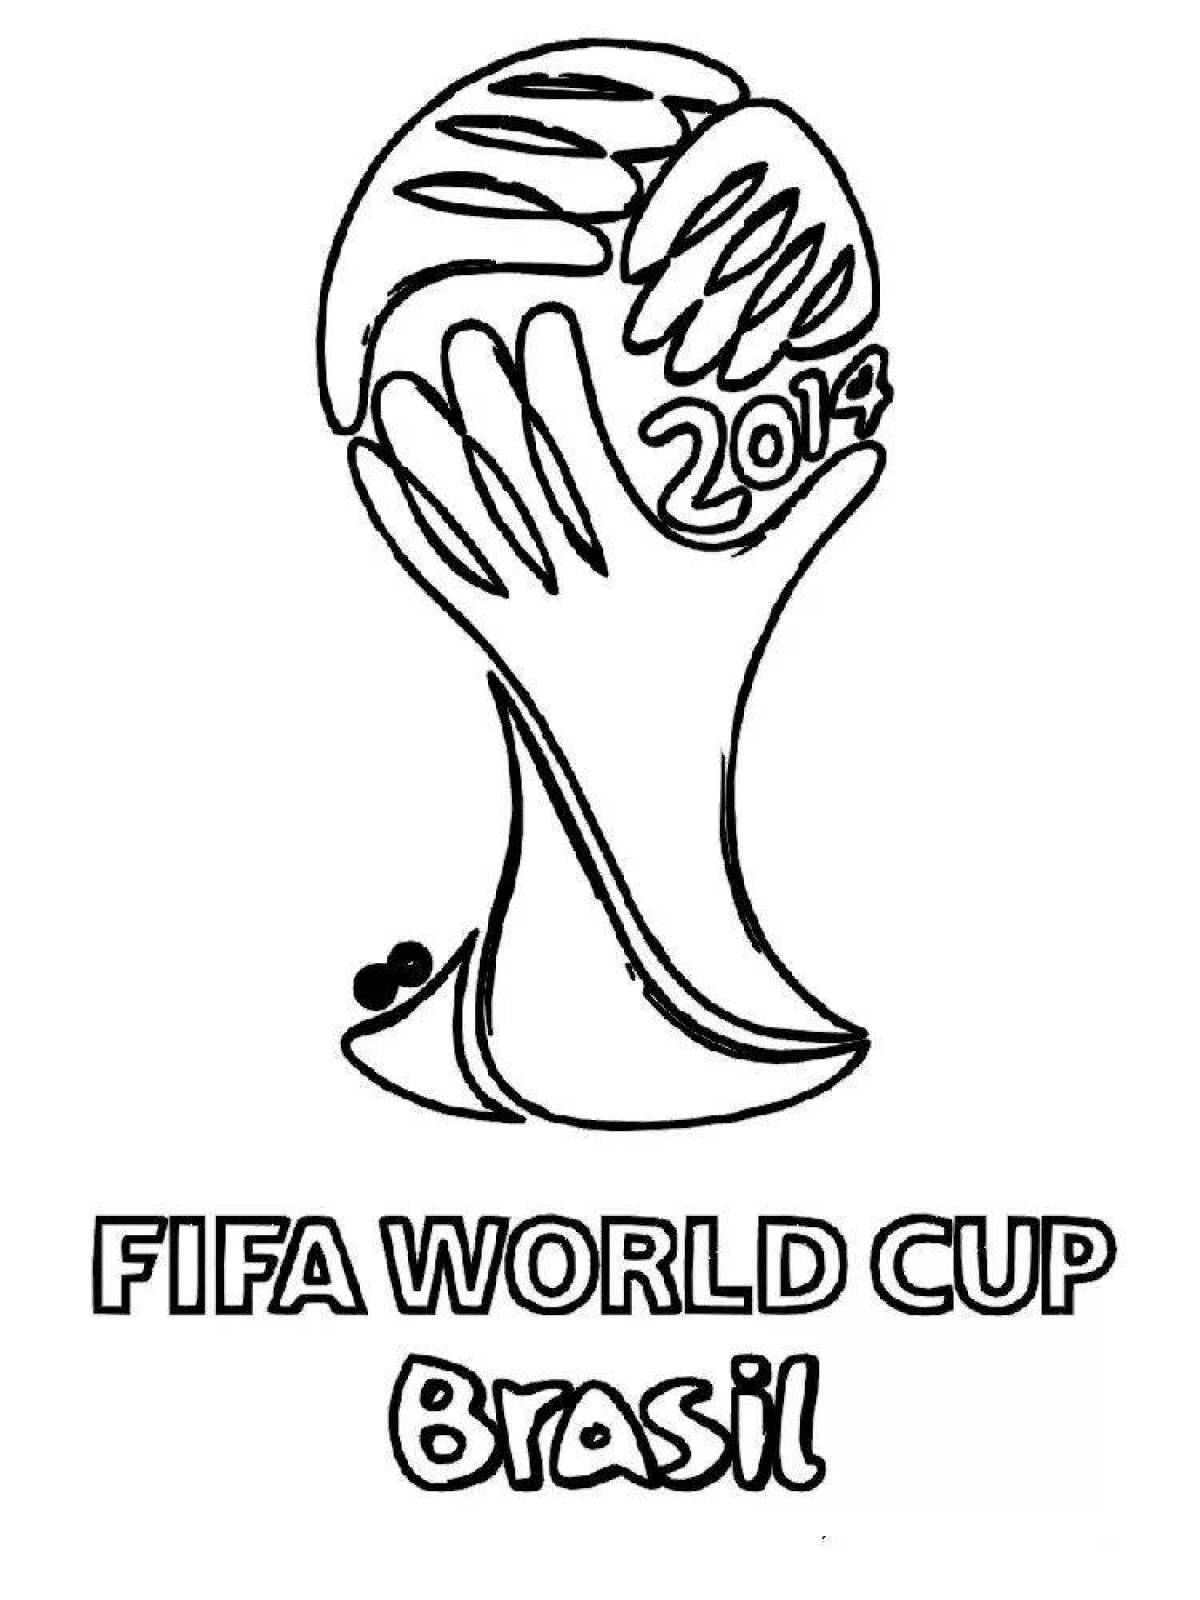 Football World Cup fun coloring book